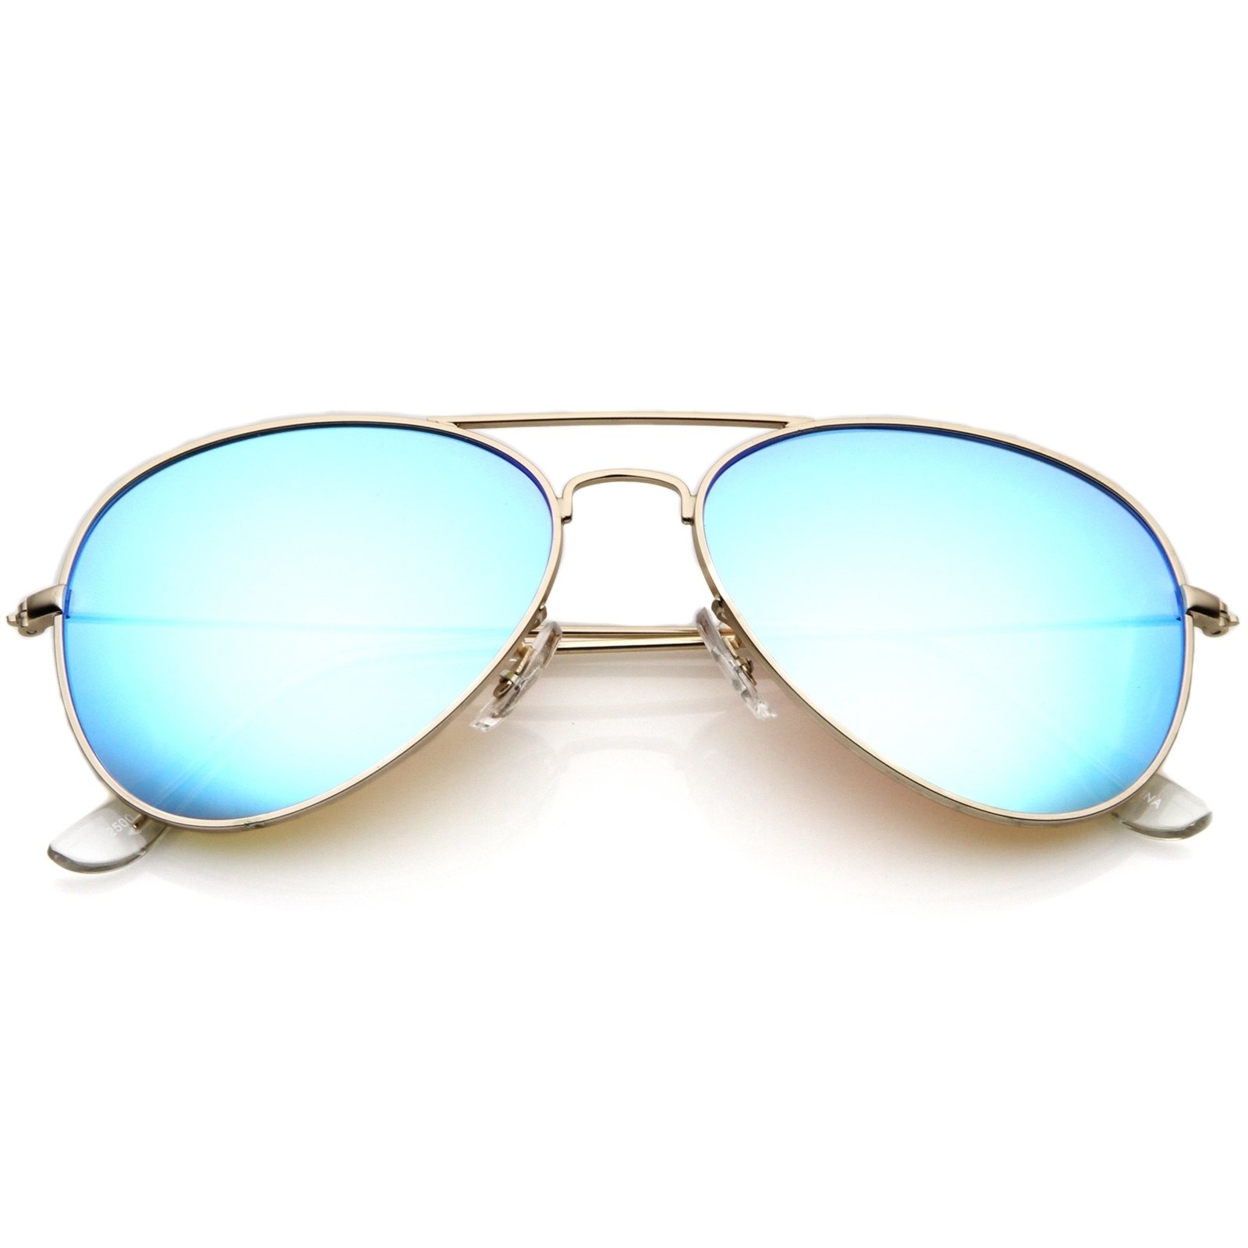 Premium Nickel Plated Frame Multi-Coated Mirror Lens Aviator Sunglasses 59mm - Gold / Green Mirror